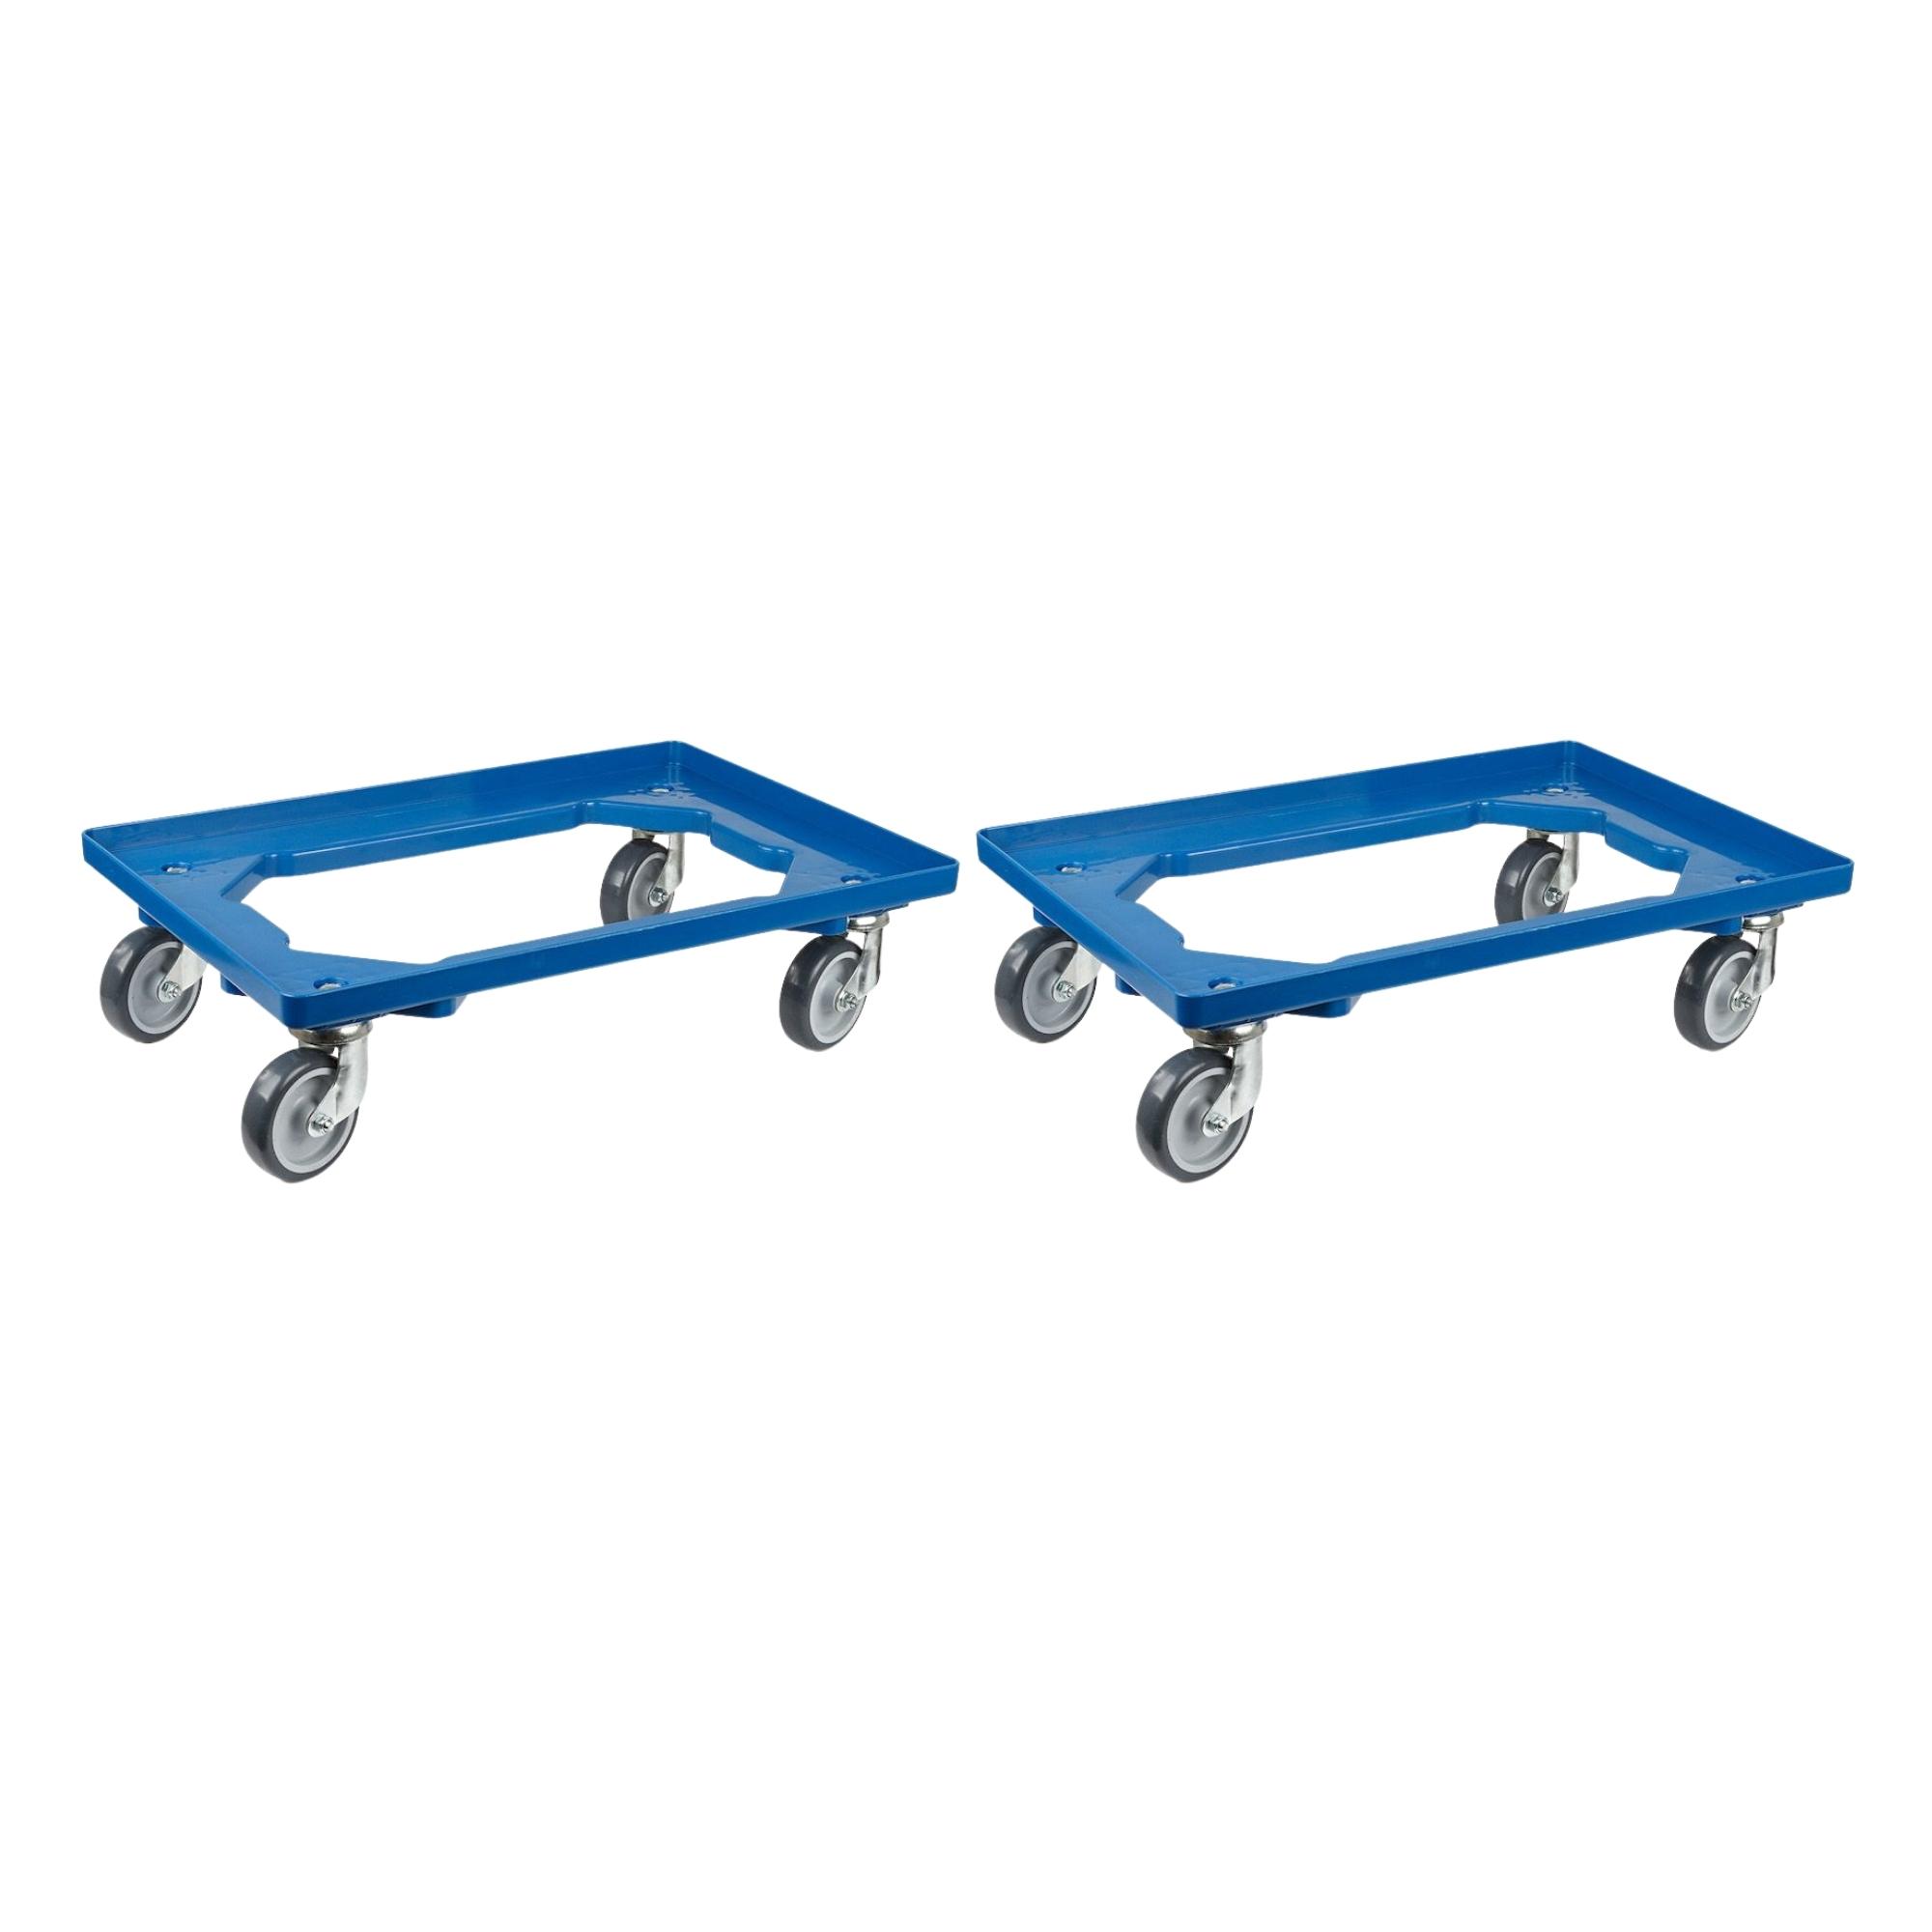 SparSet 2x Transportroller für Euroboxen 60x40cm mit Gummiräder blau | Offenes Deck | 4 Lenkrollen | Traglast 300kg | Kistenroller Logistikroller Rollwagen Profi-Fahrgestell